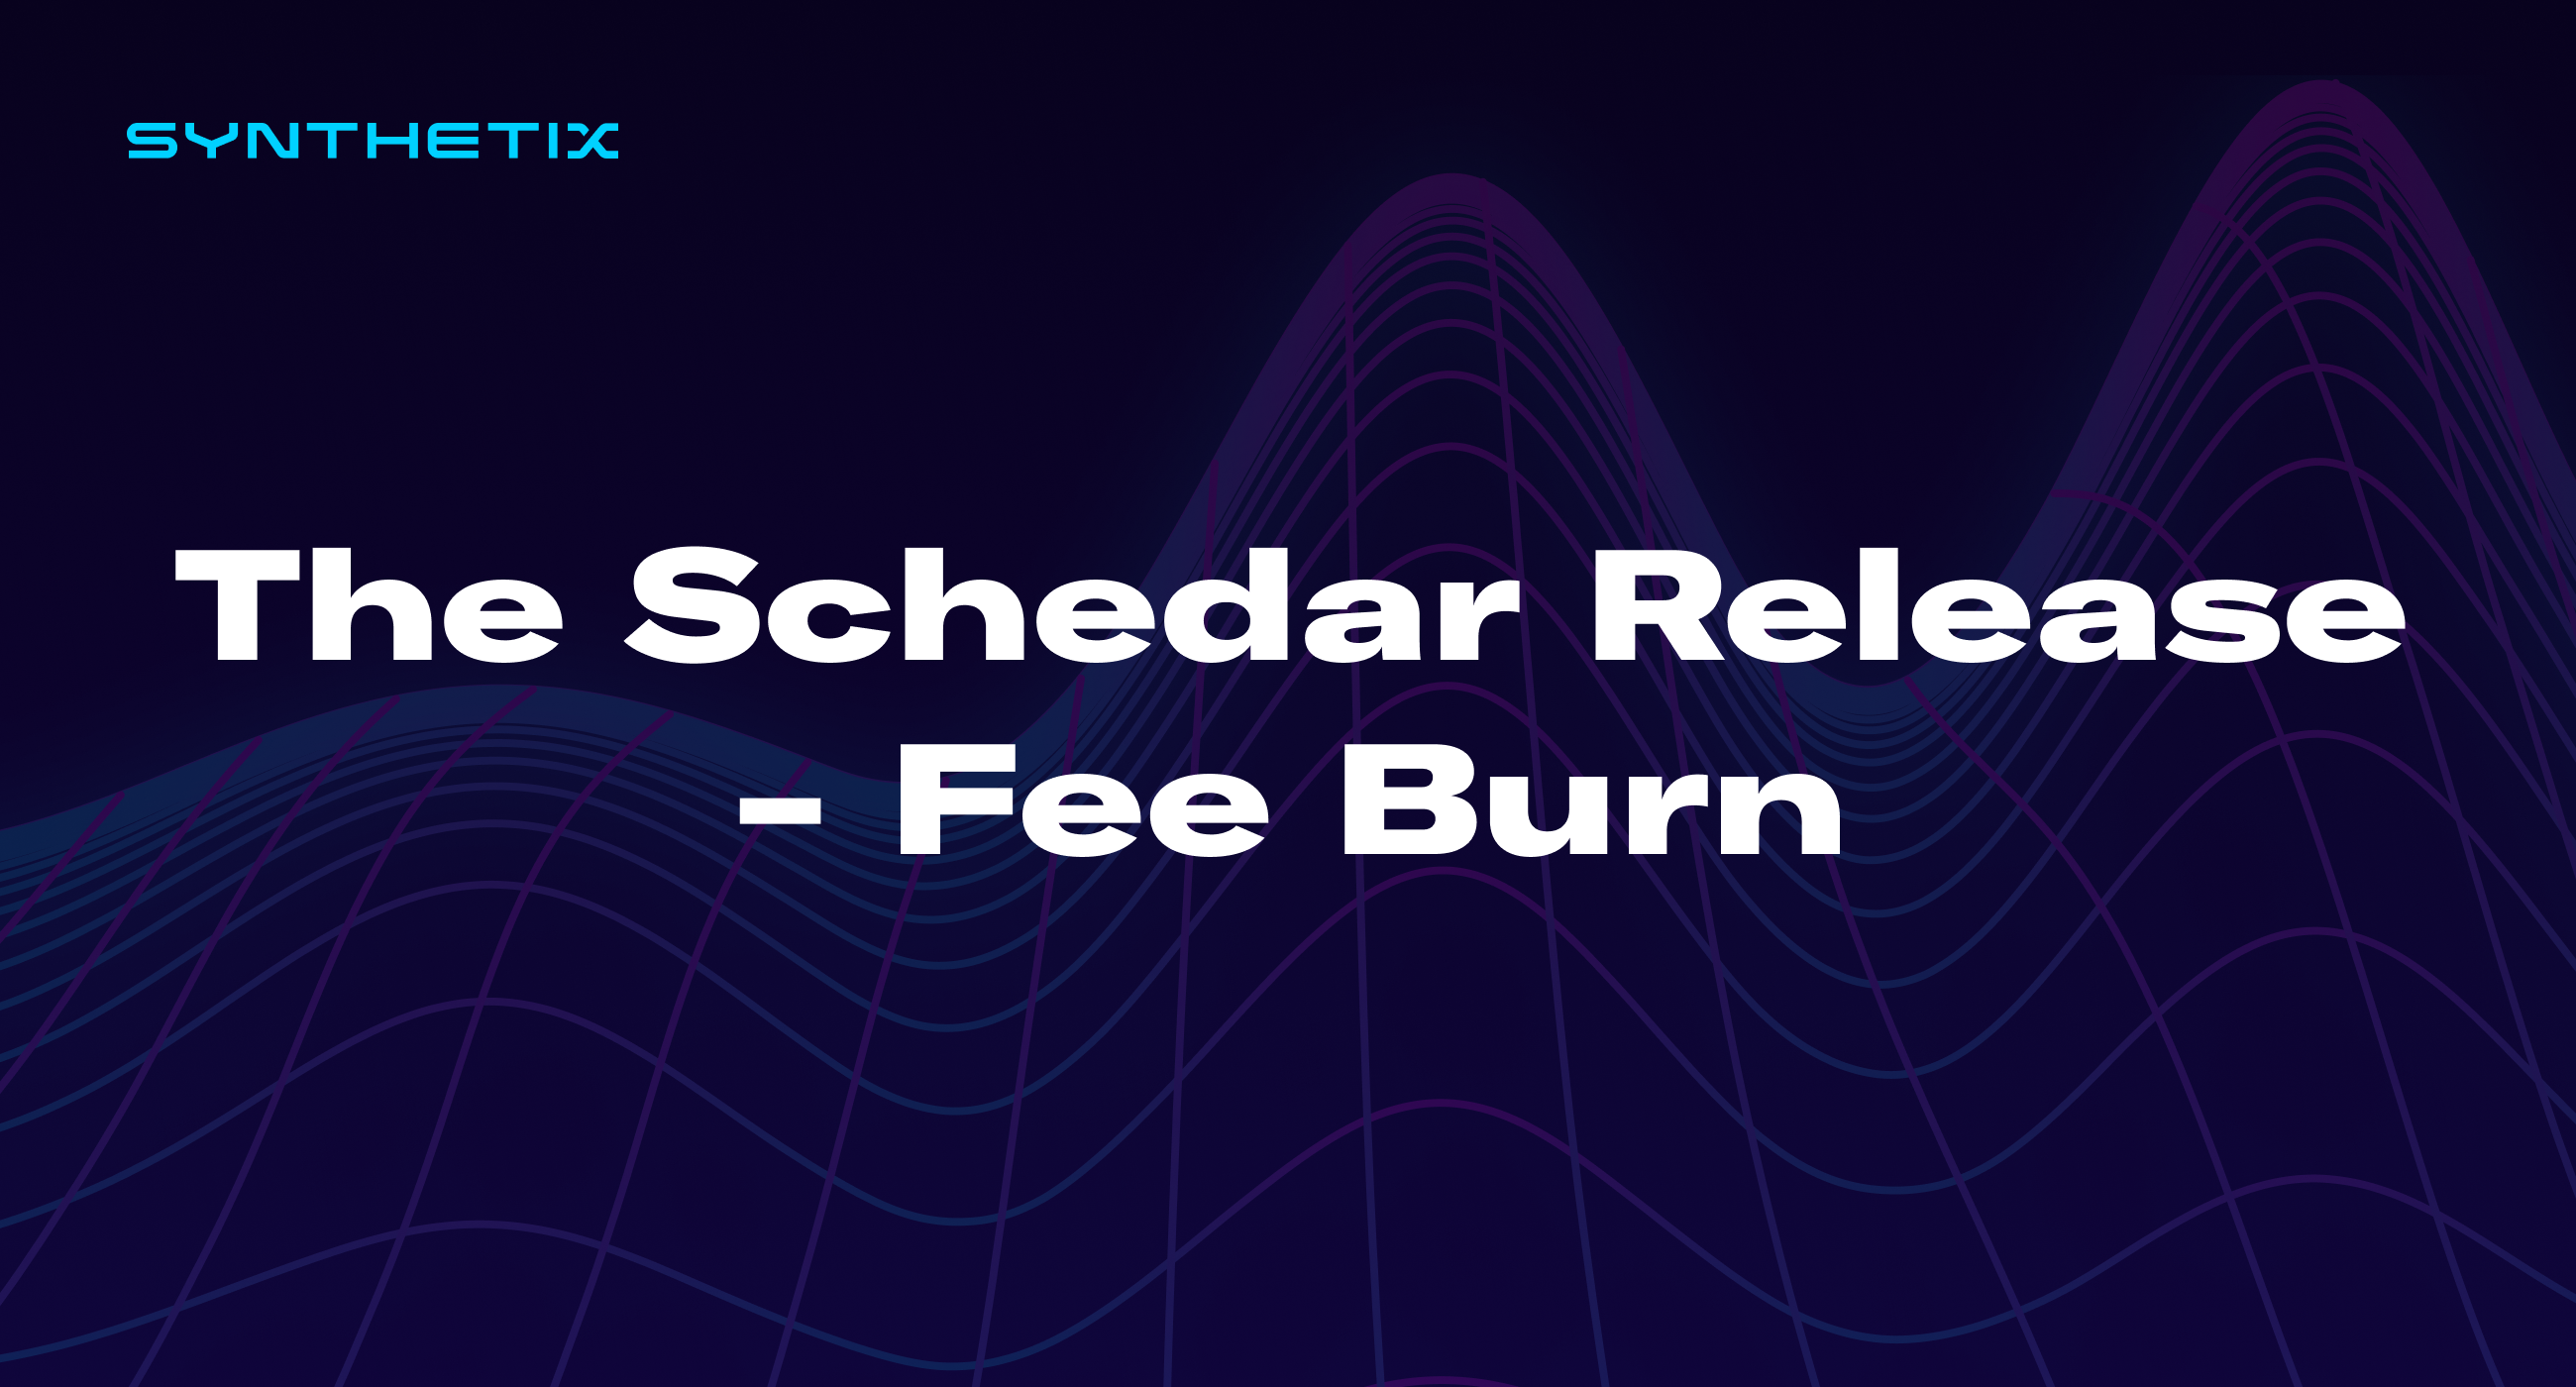 The Schedar Release - Fee Burn